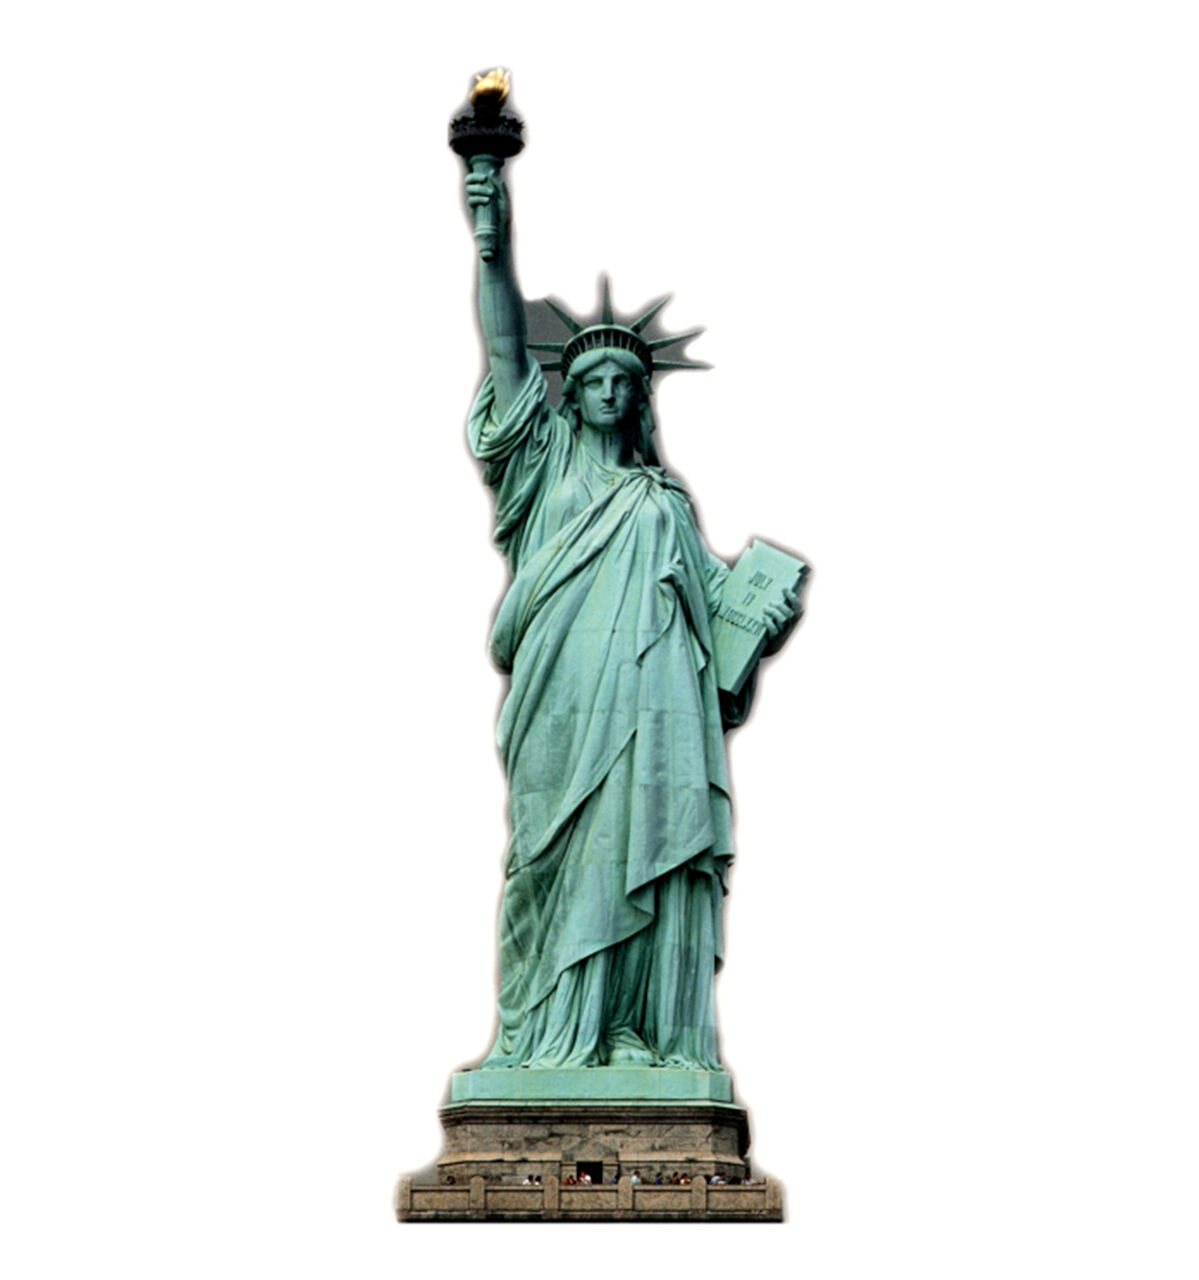 Statue of Liberty Lifesize Cardboard Cutout Standups New York NYC Poster Prop